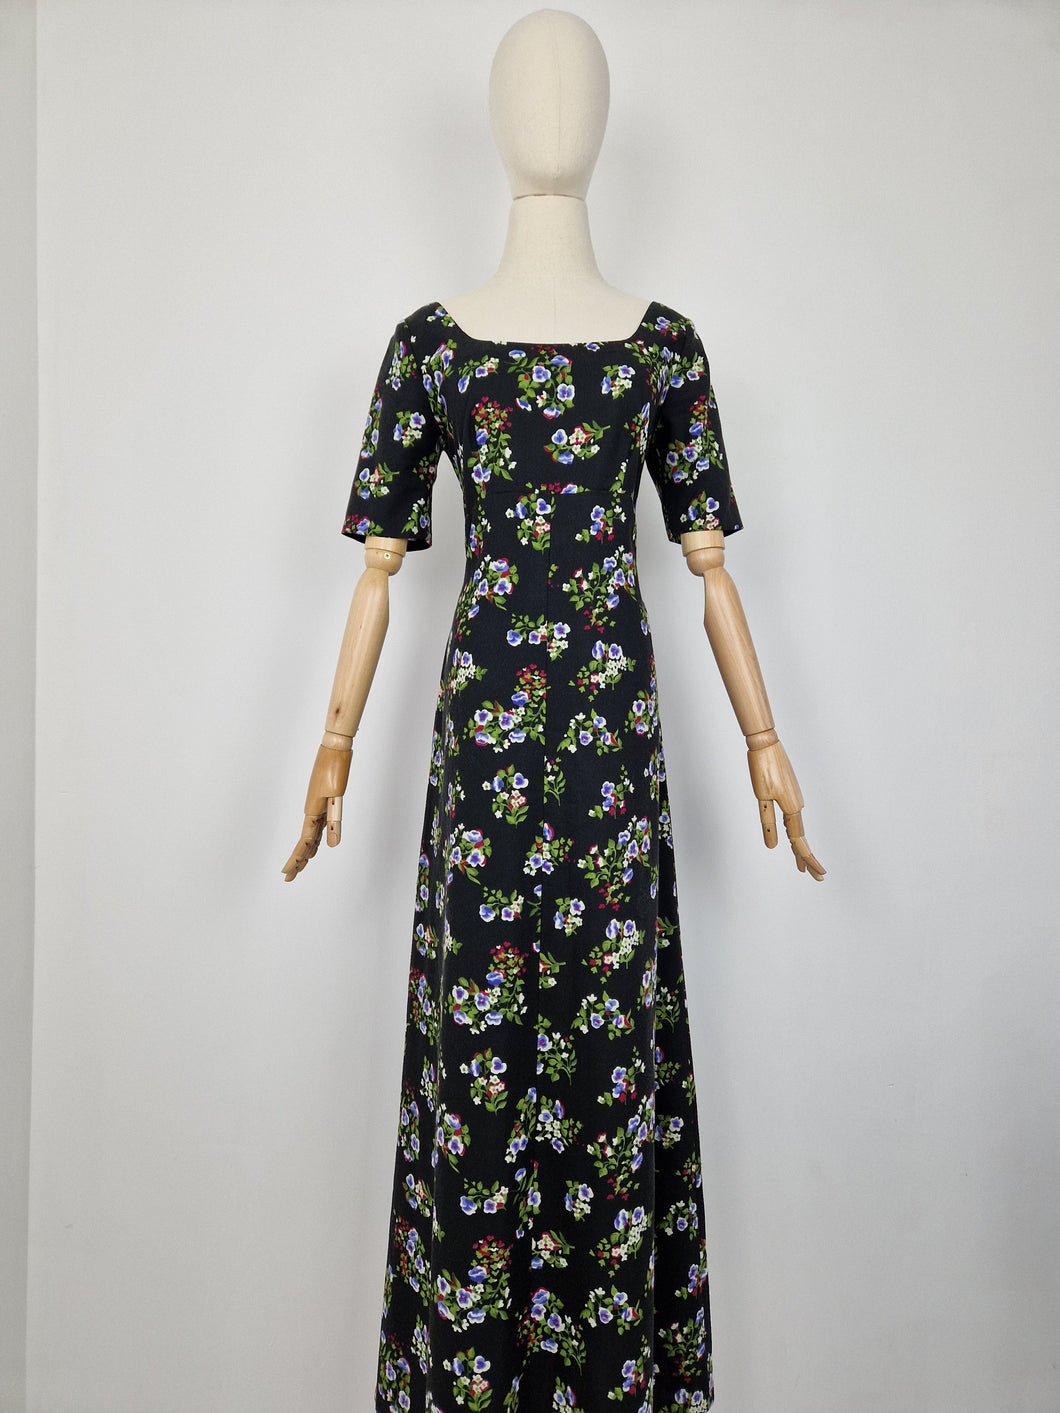 Vintage 70s maxi dress